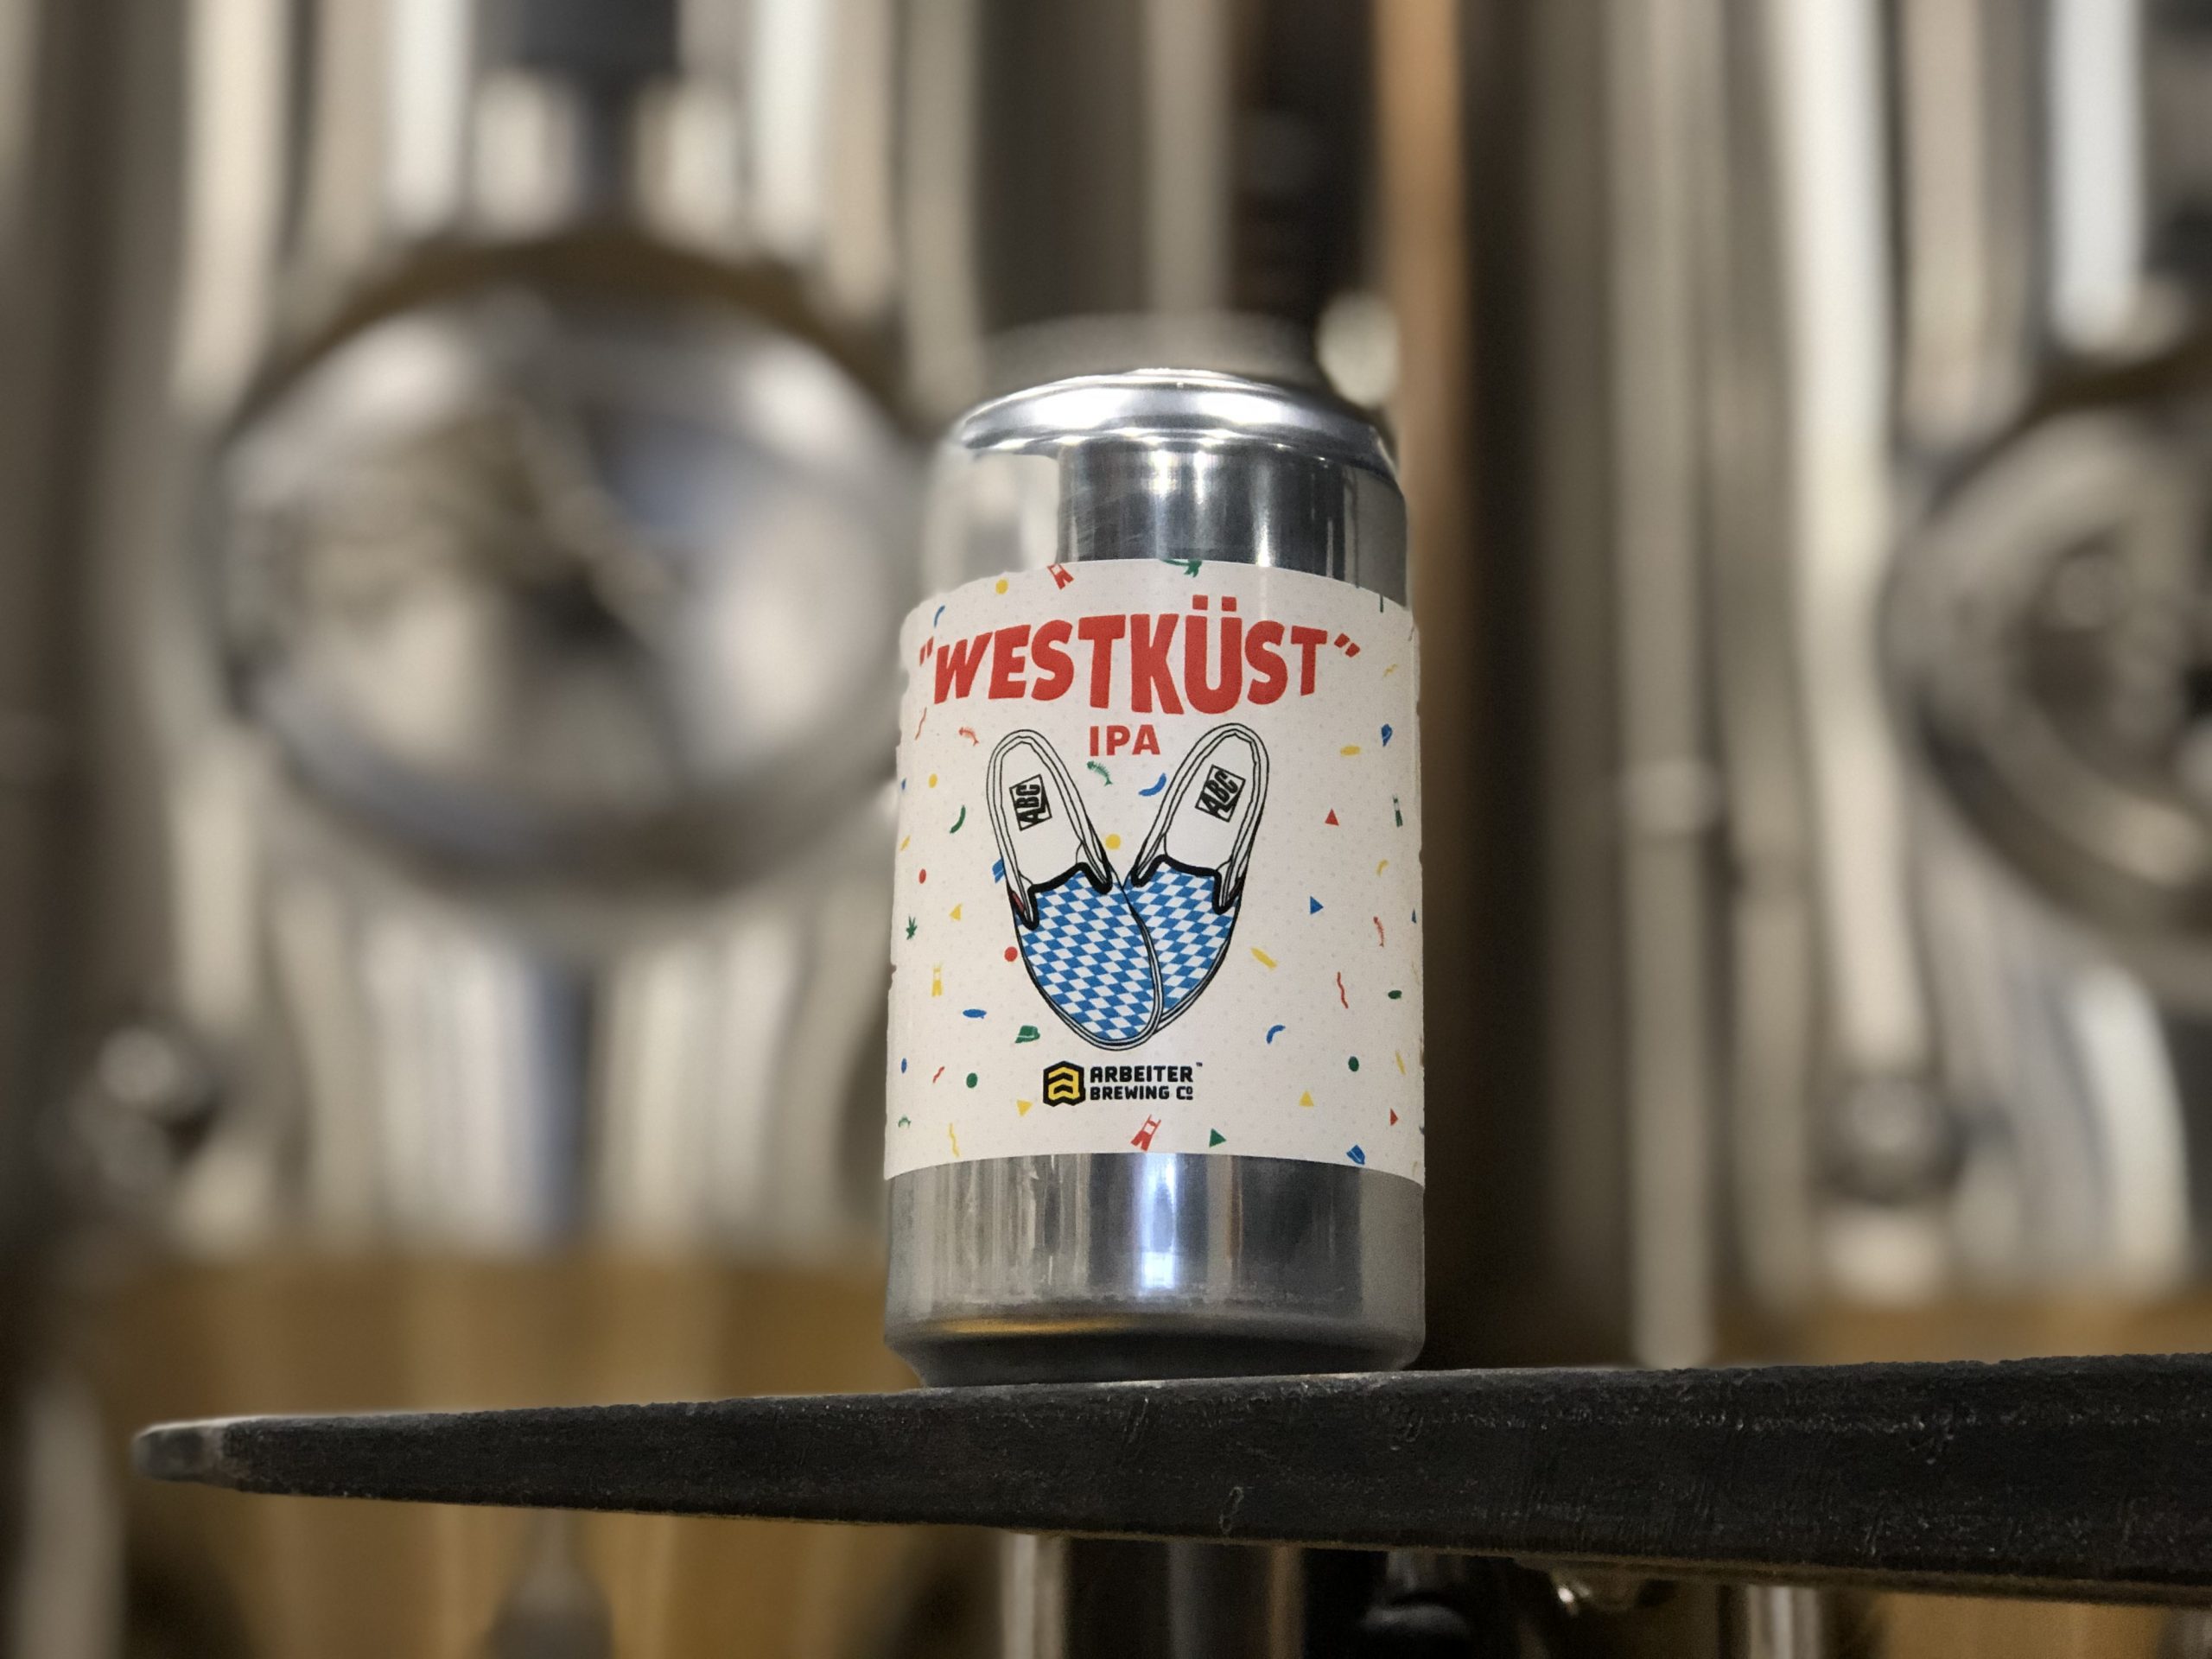 WestKust IPA by Arbeiter Brewing